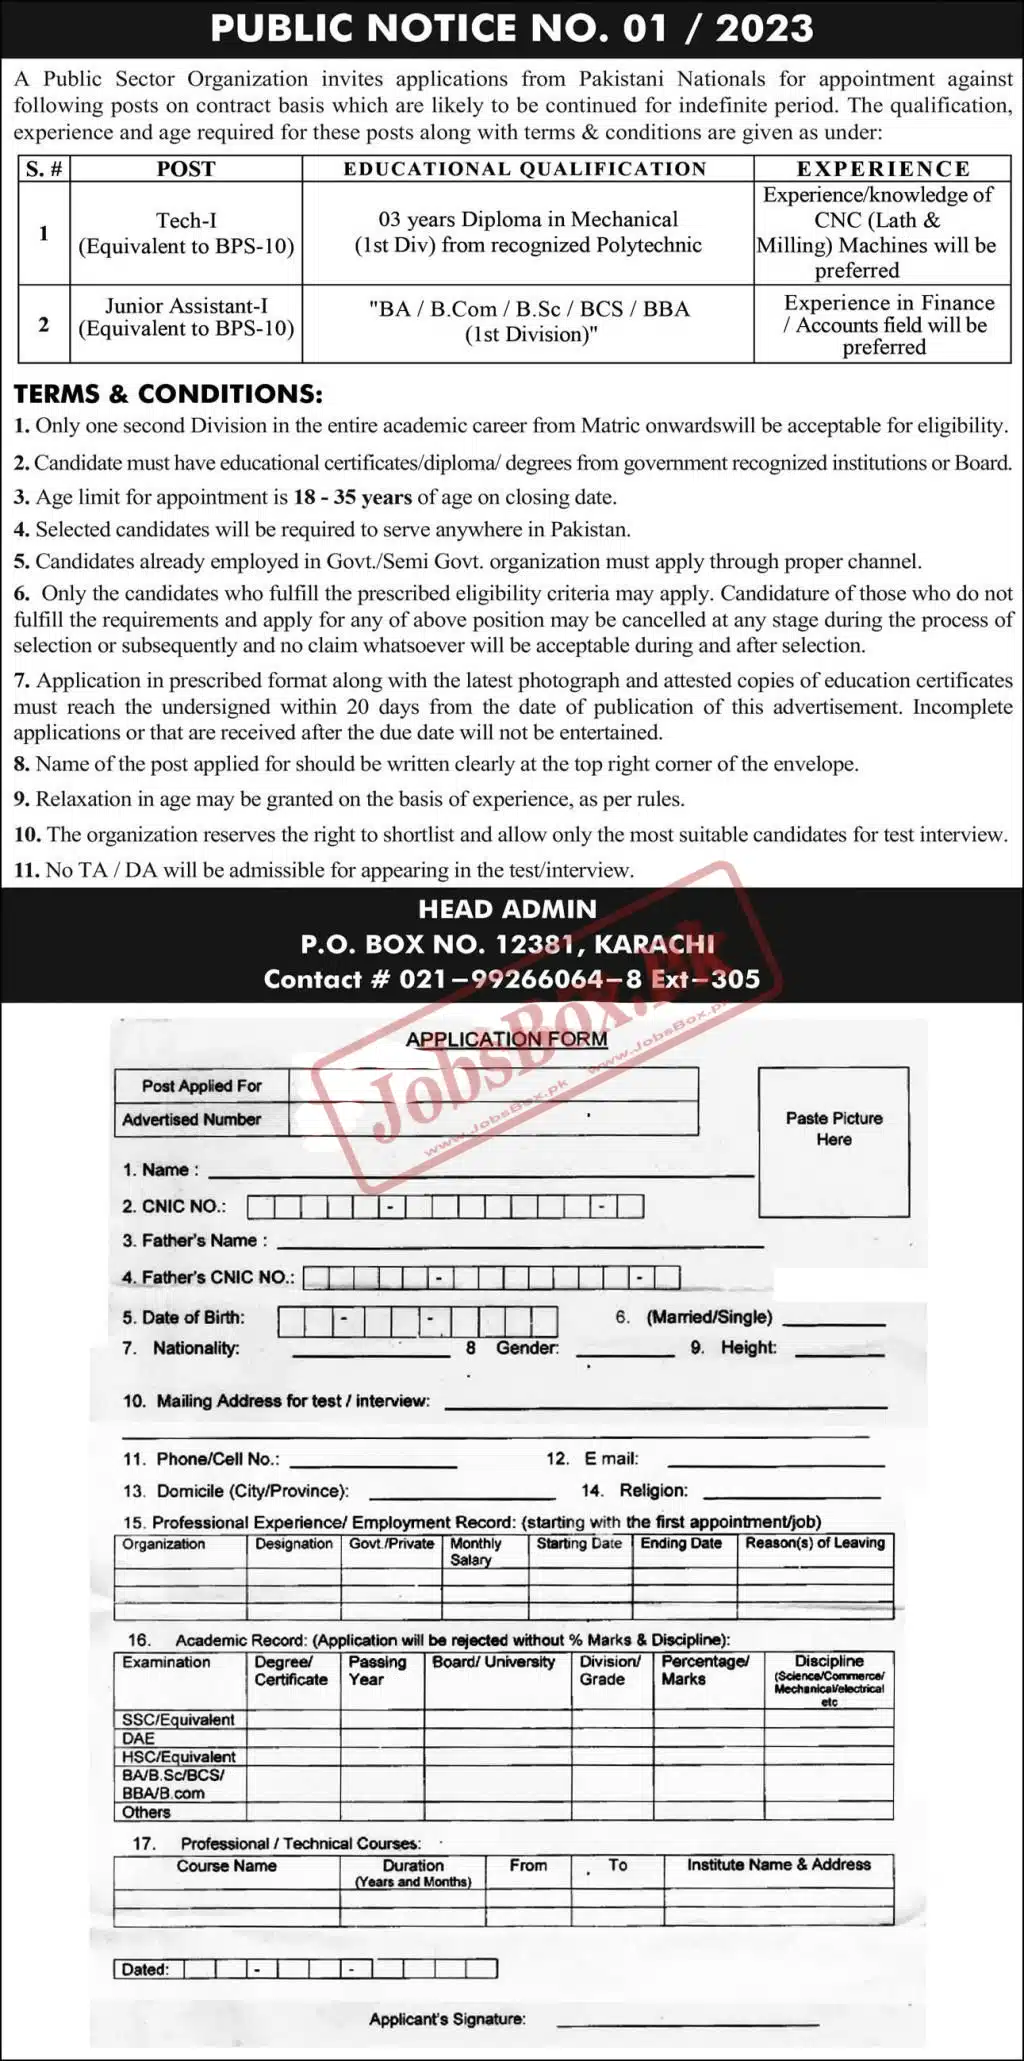 PO Box 12381 Karachi Jobs 2023 - Atomic Energy Jobs Recruitment Notice